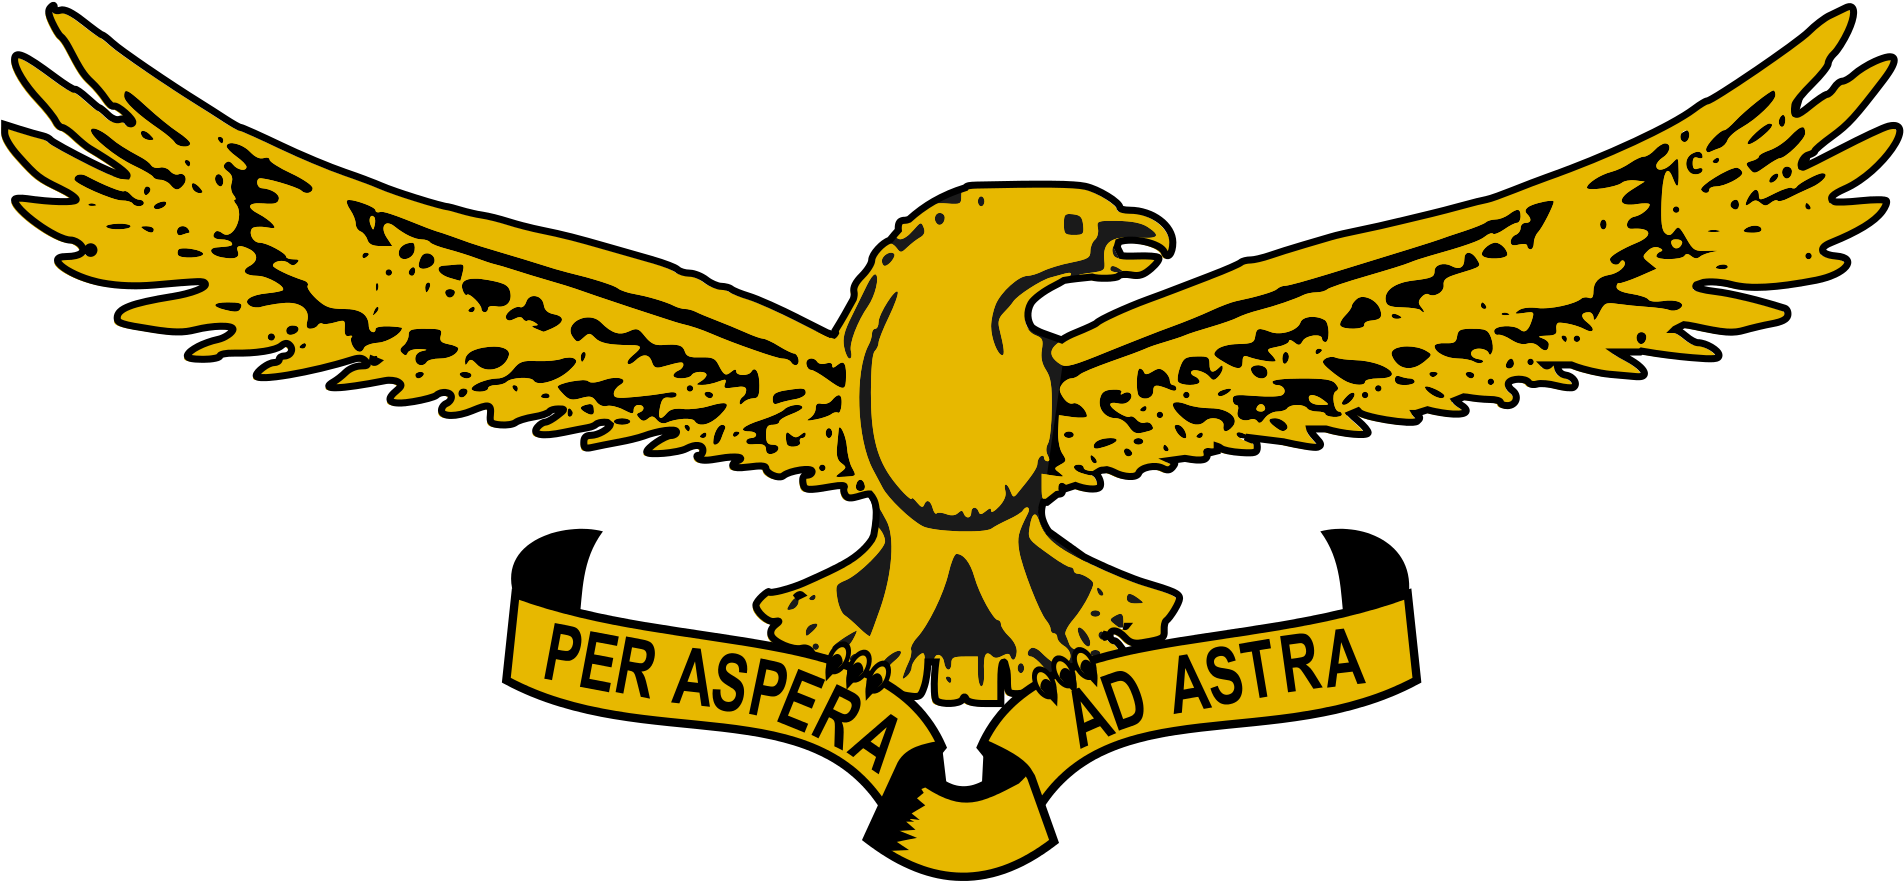 Open - South African Air Force Emblem (2000x985)